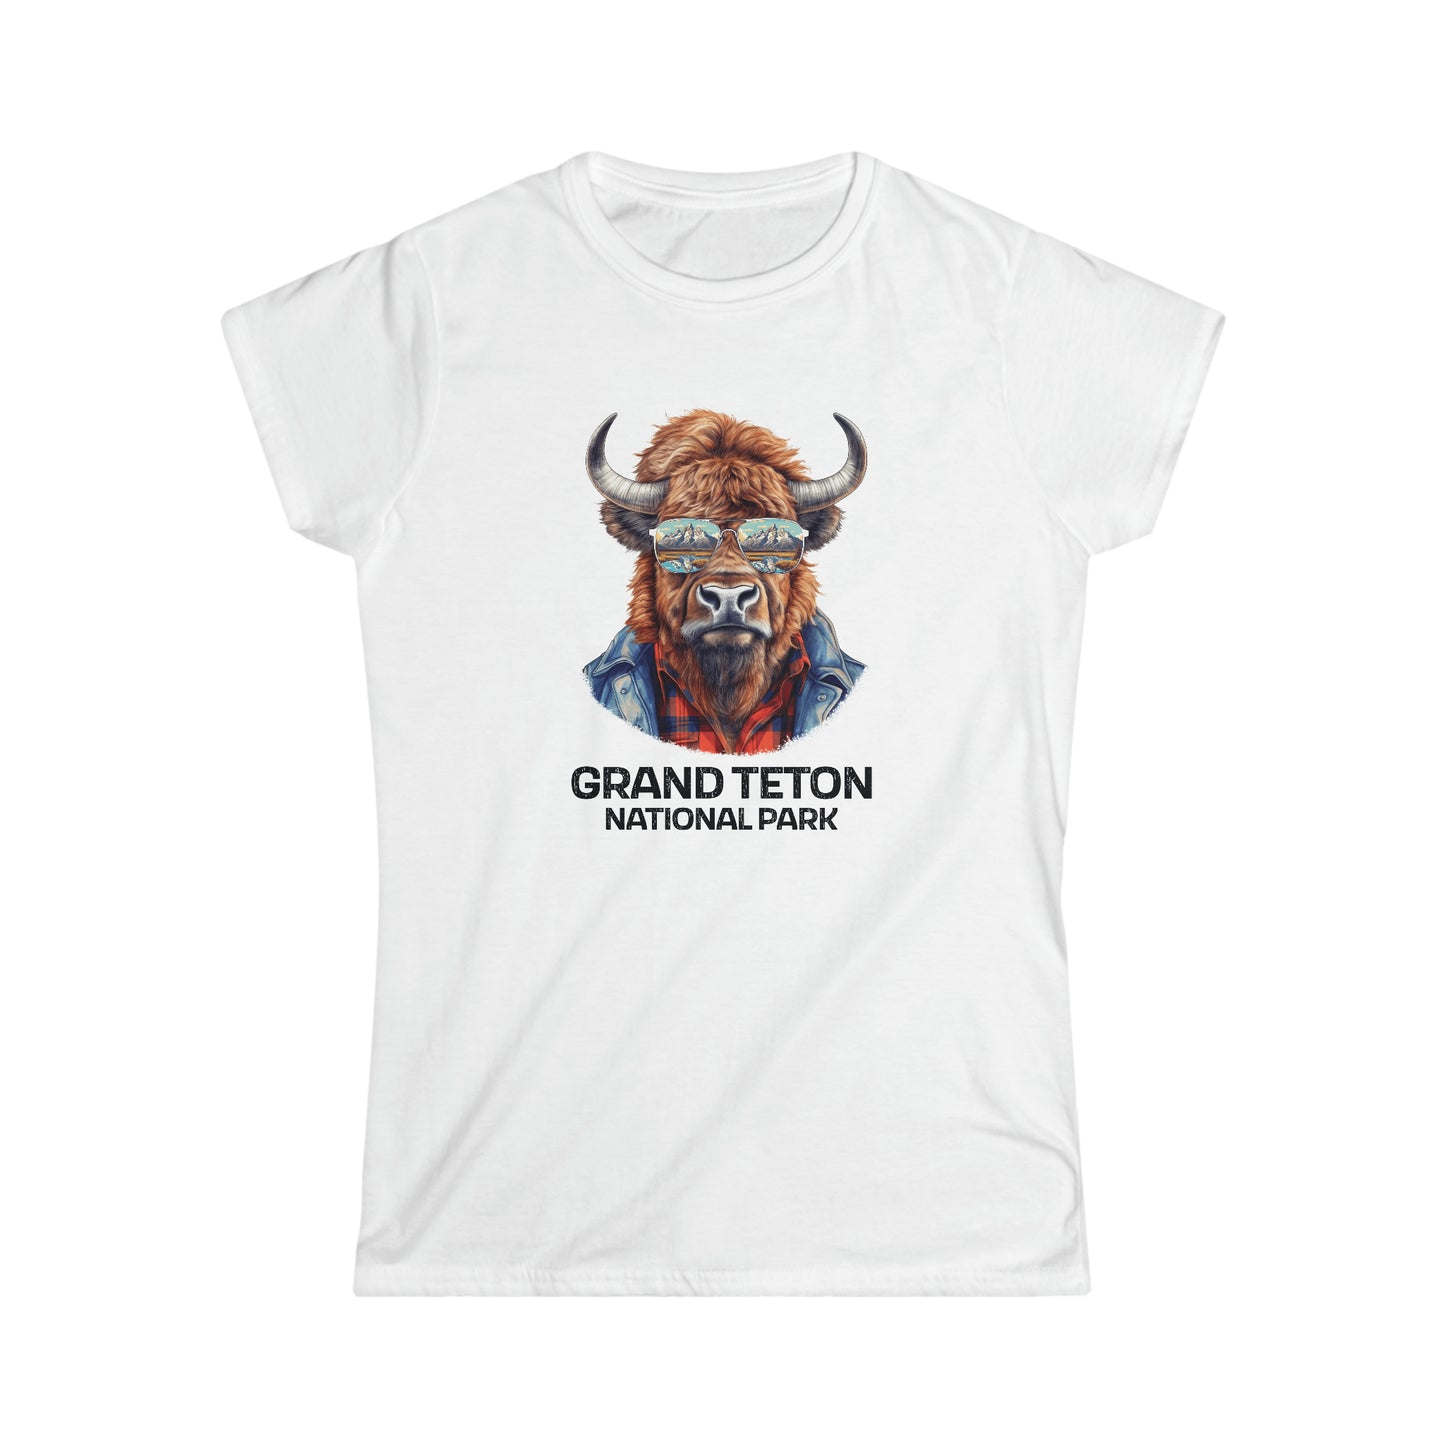 Grand Teton National Park Women's T-Shirt - Cool Bison